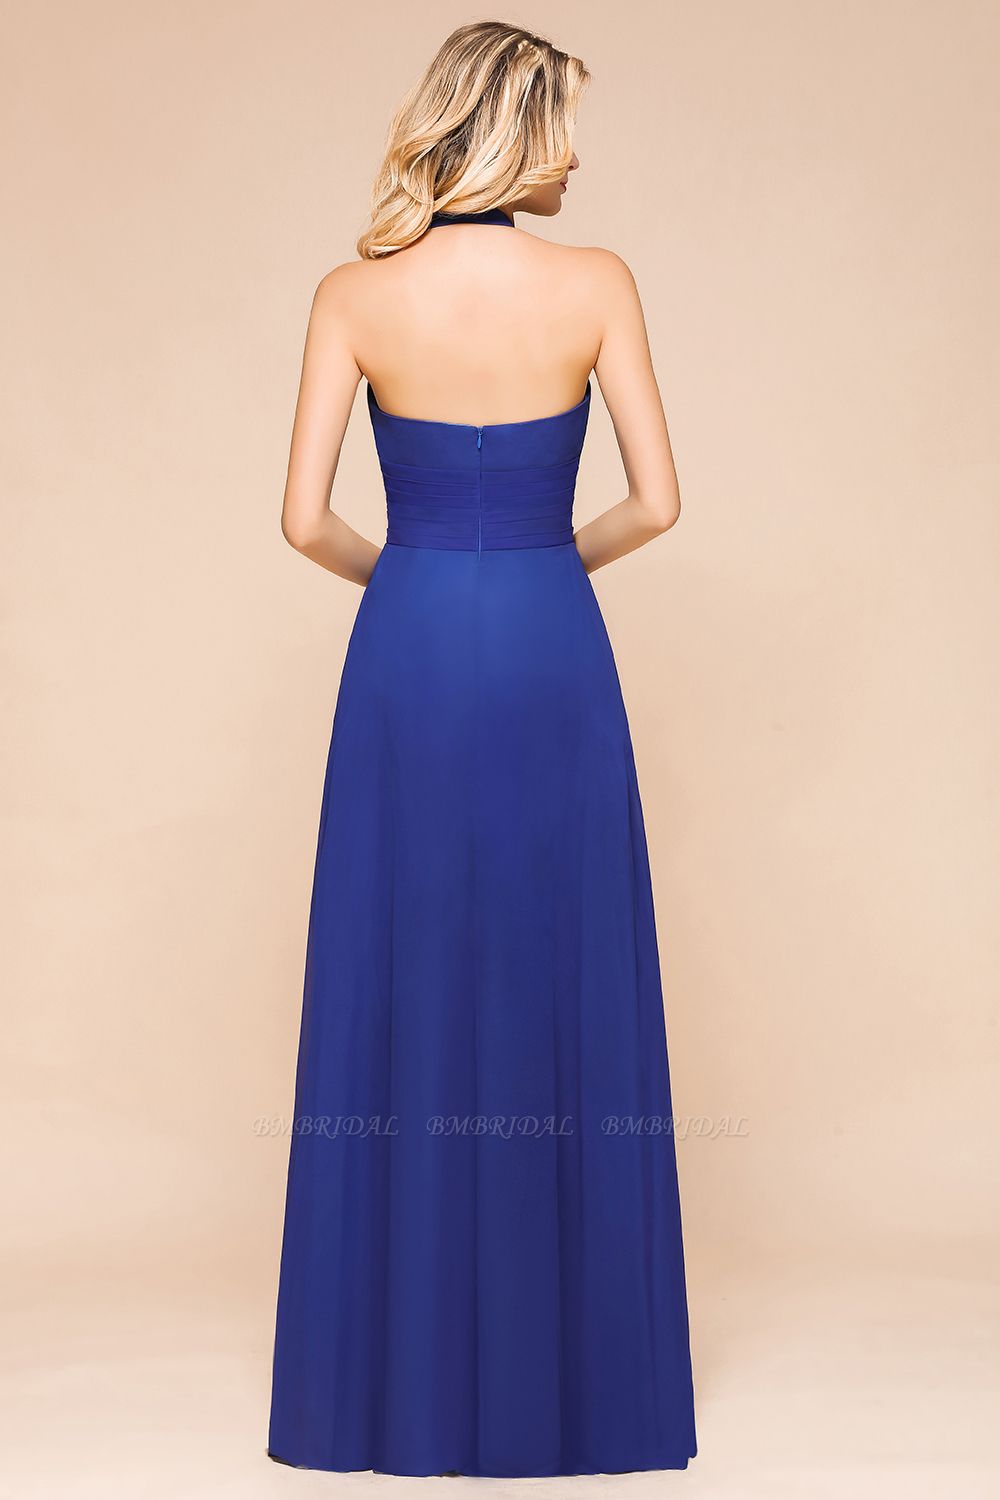 BMbridal Stylish Halter Backless Royal Blue Bridesmaid Dress Affordable